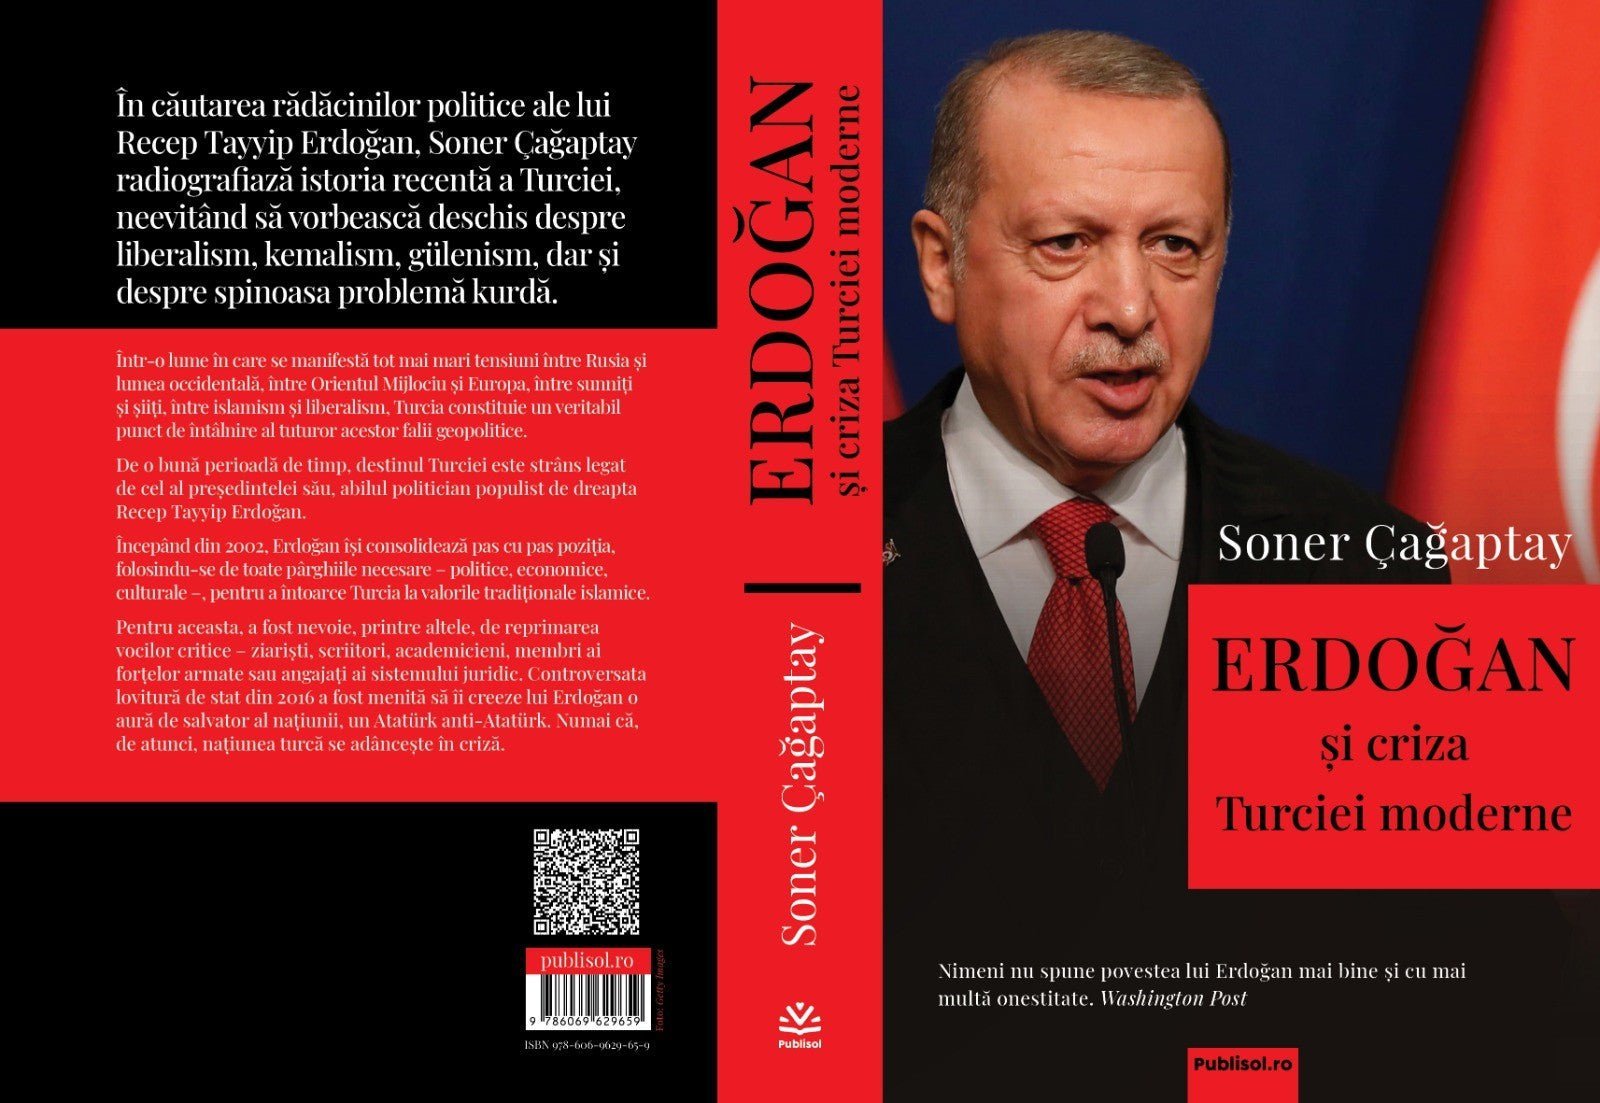 Erdogan si criza Turciei moderne, Soner Cagaptay - Ed. digitala - PDF - Publisol.ro